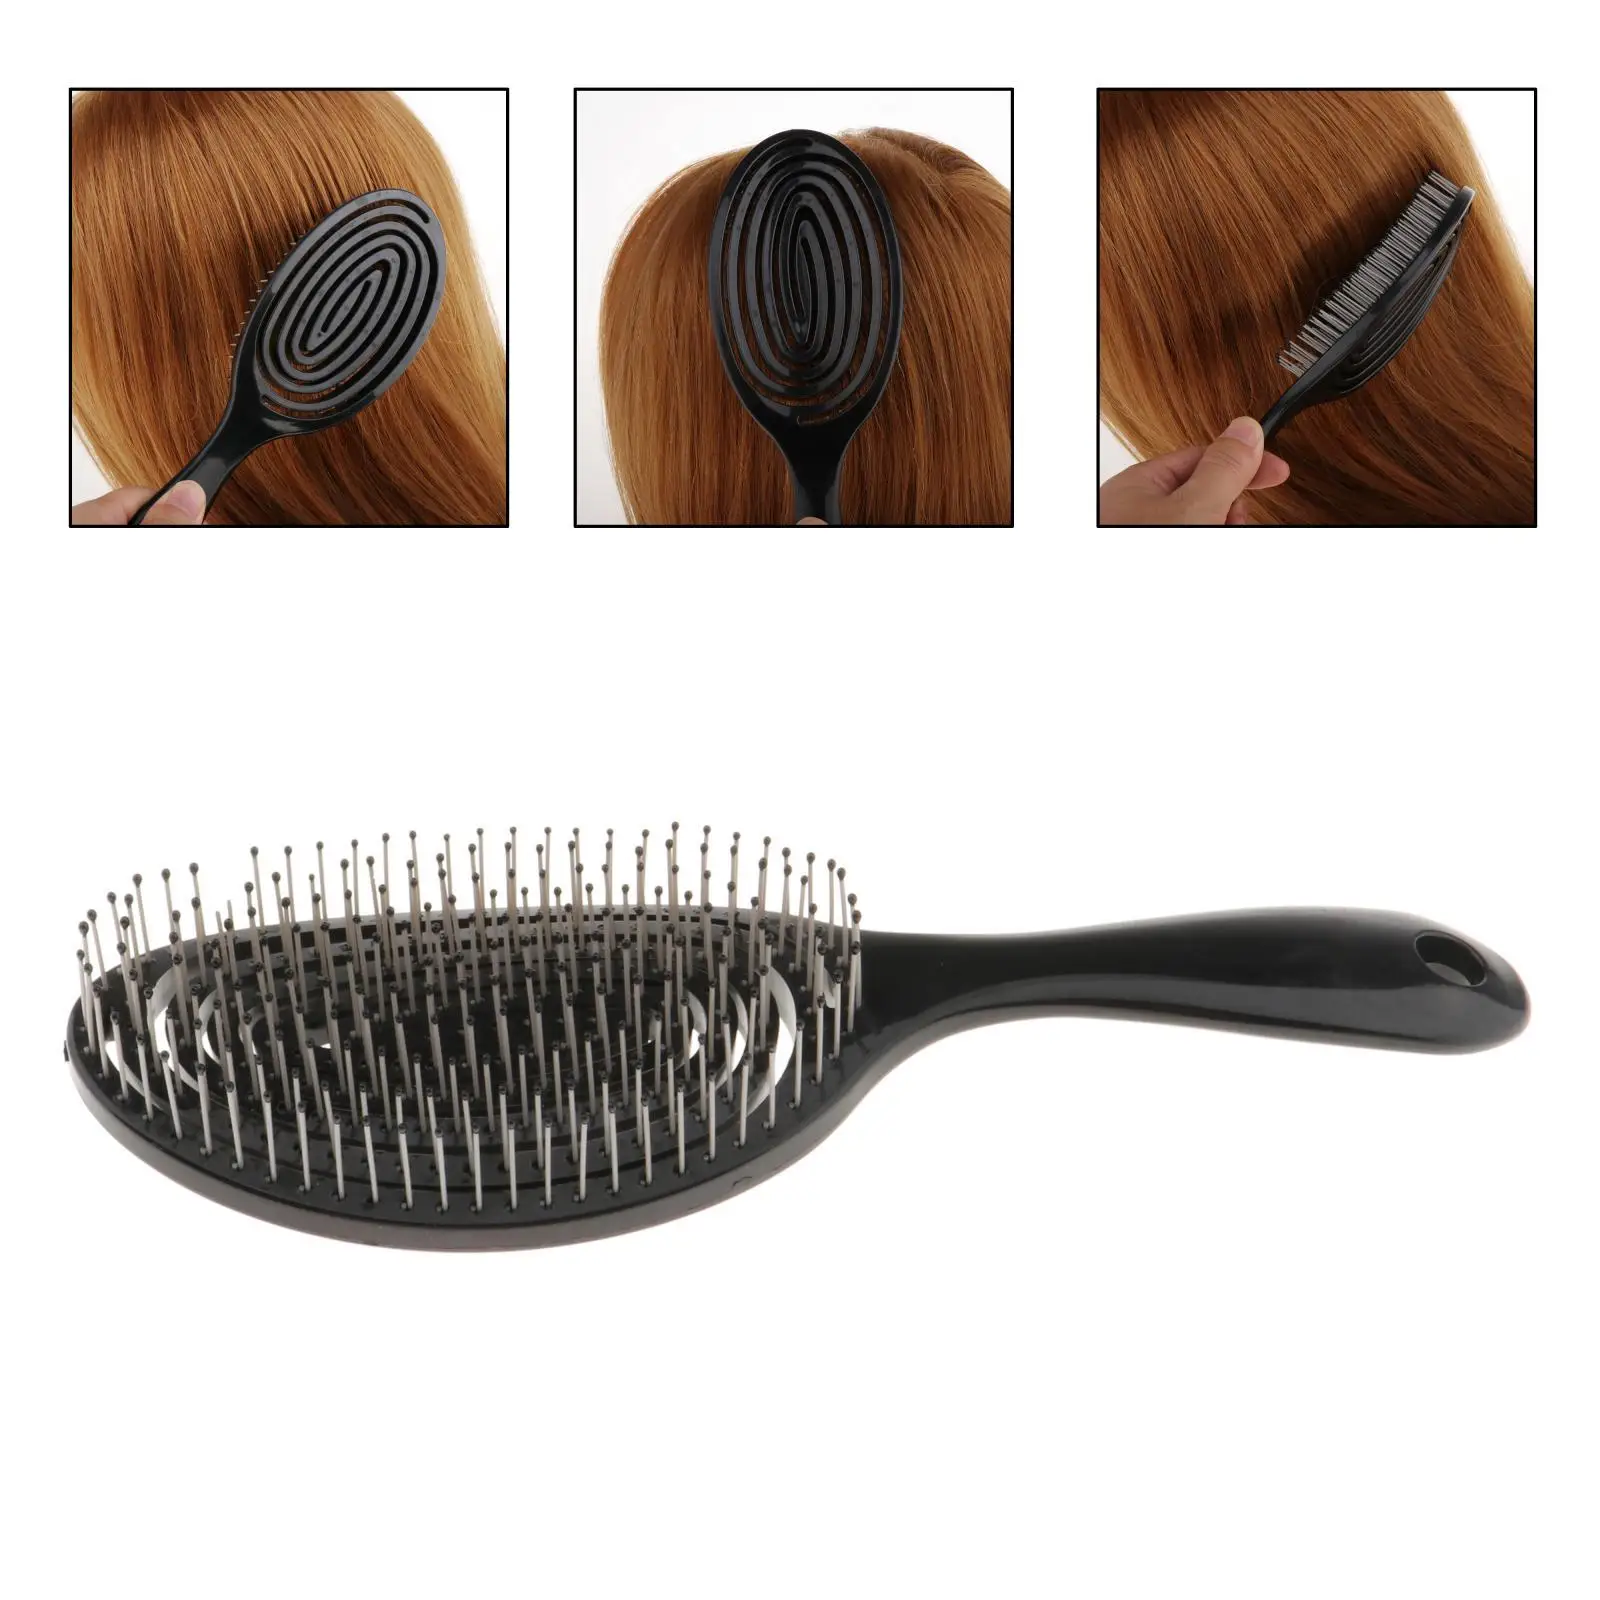 2 Hair Brush for Curly Wet Men Salon Women Portable Thin & Anti-knot